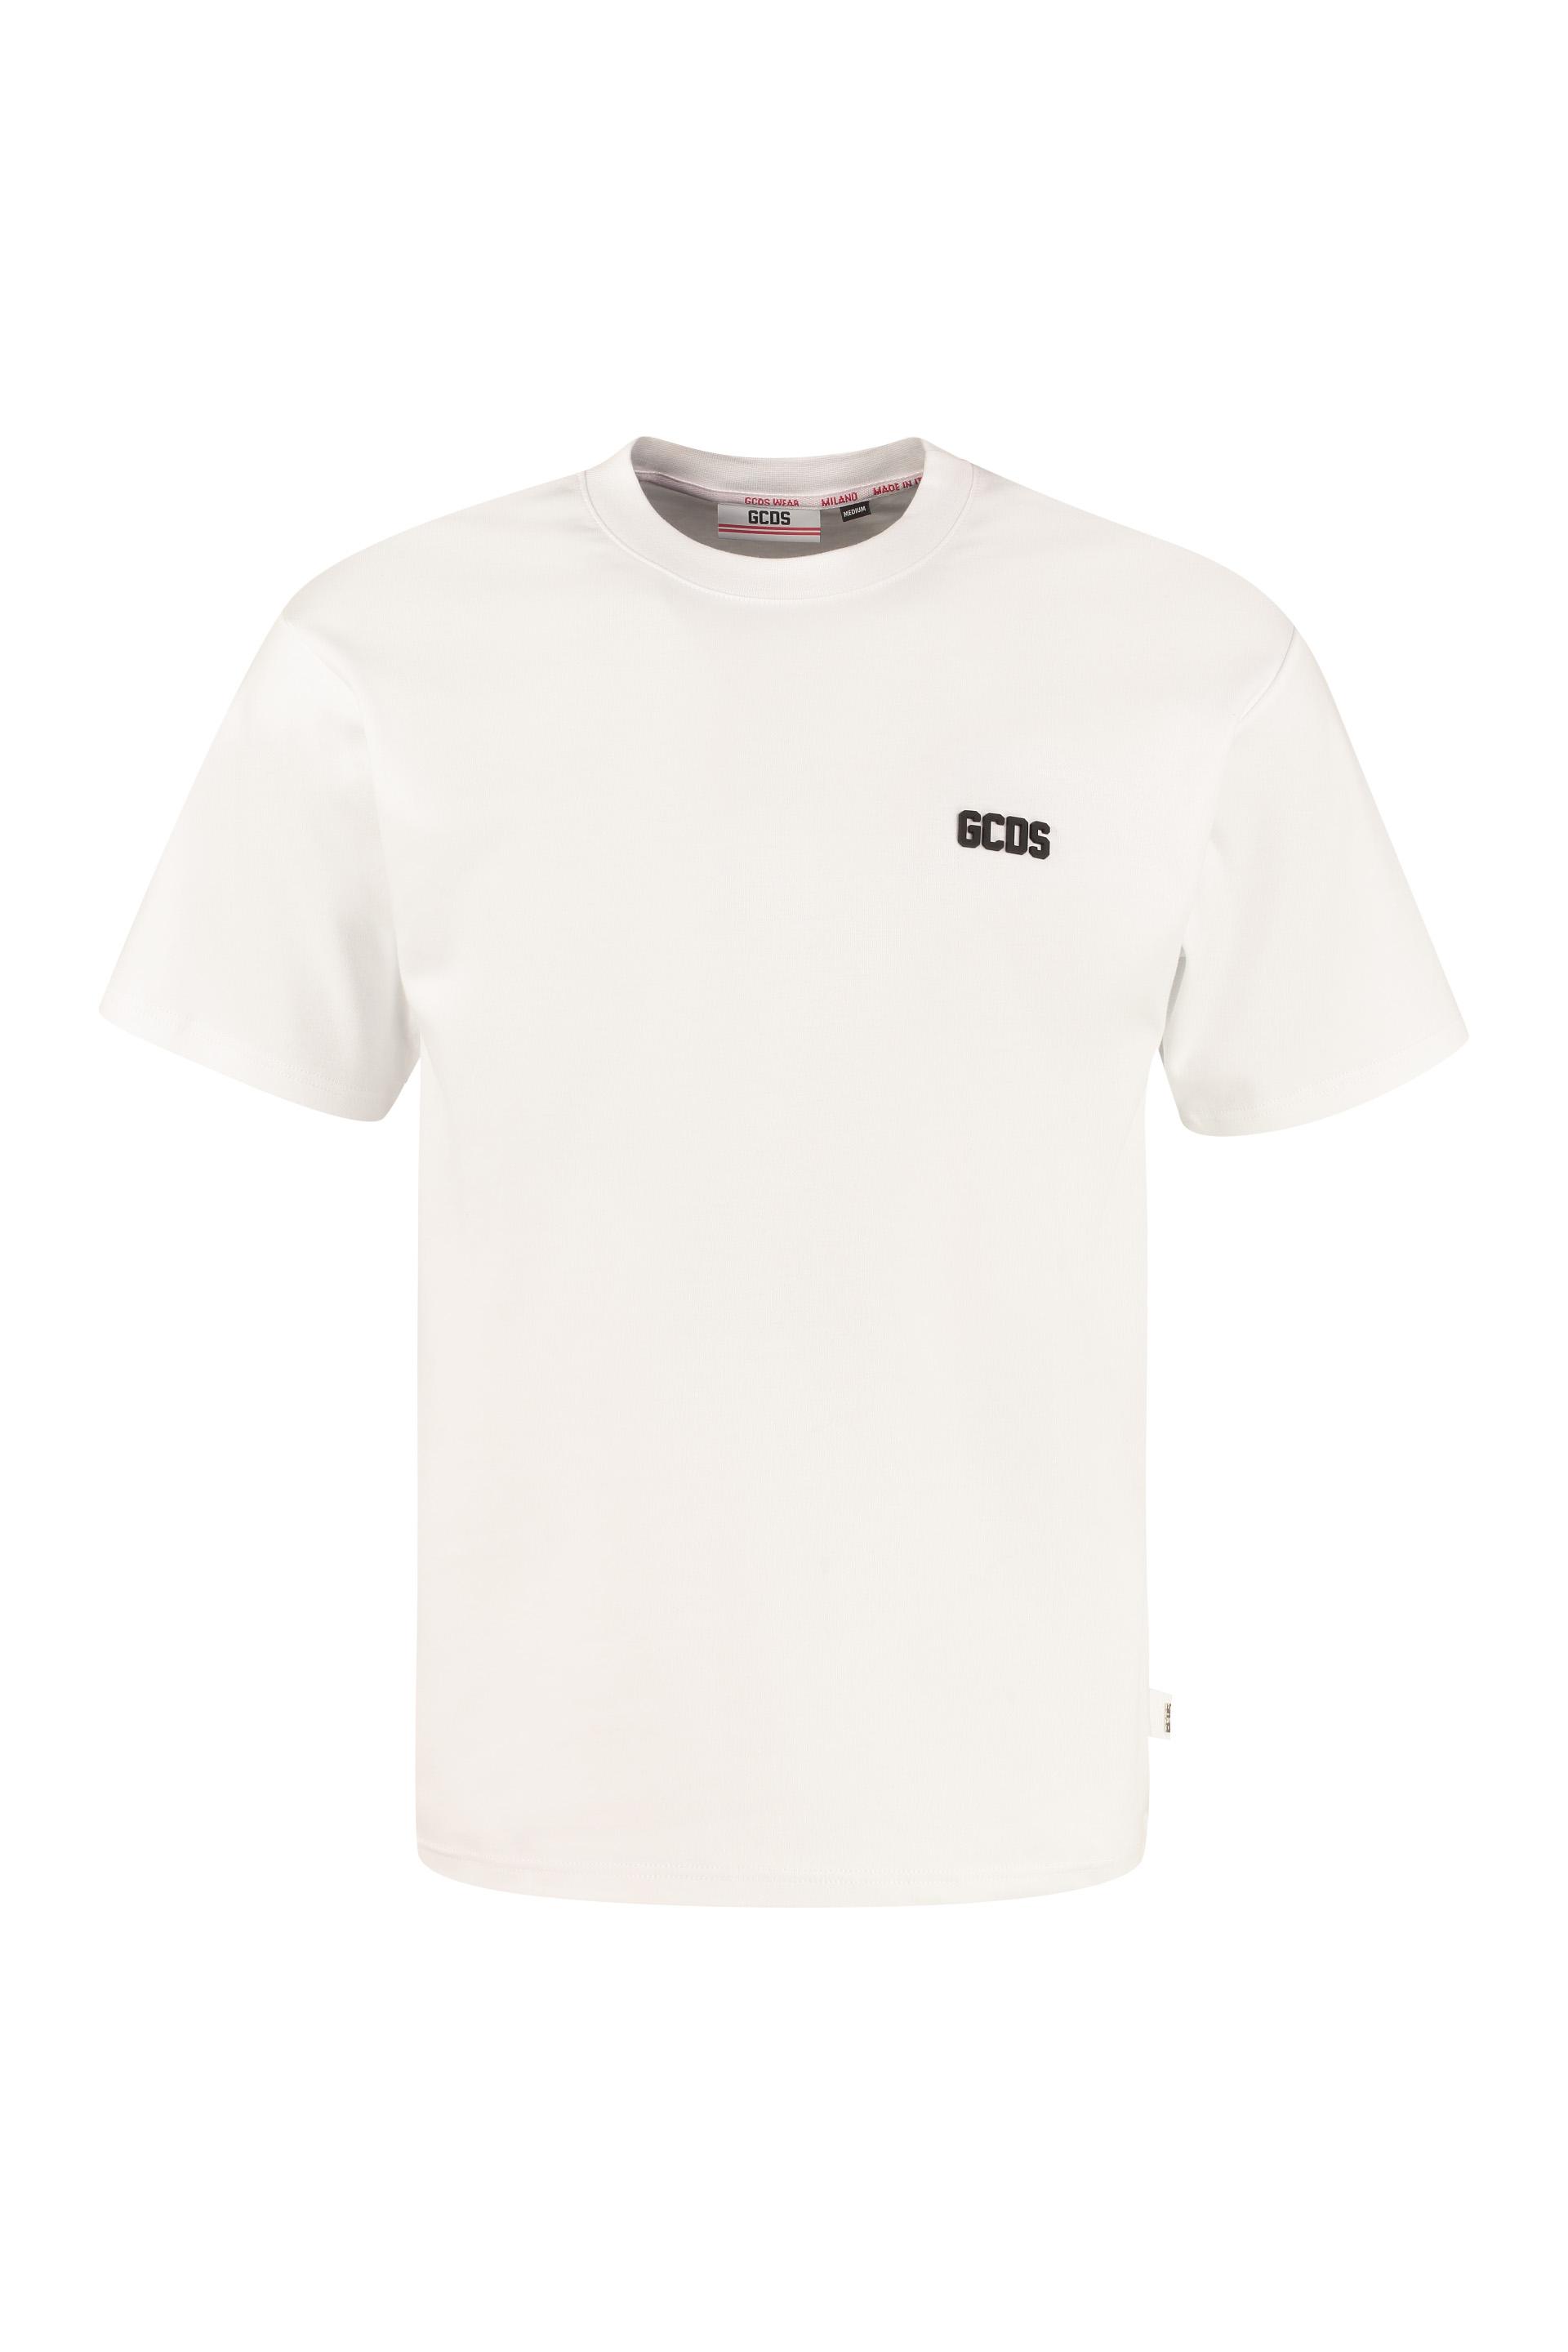 Gcds Logo Print Cotton T-shirt in White for Men - Lyst